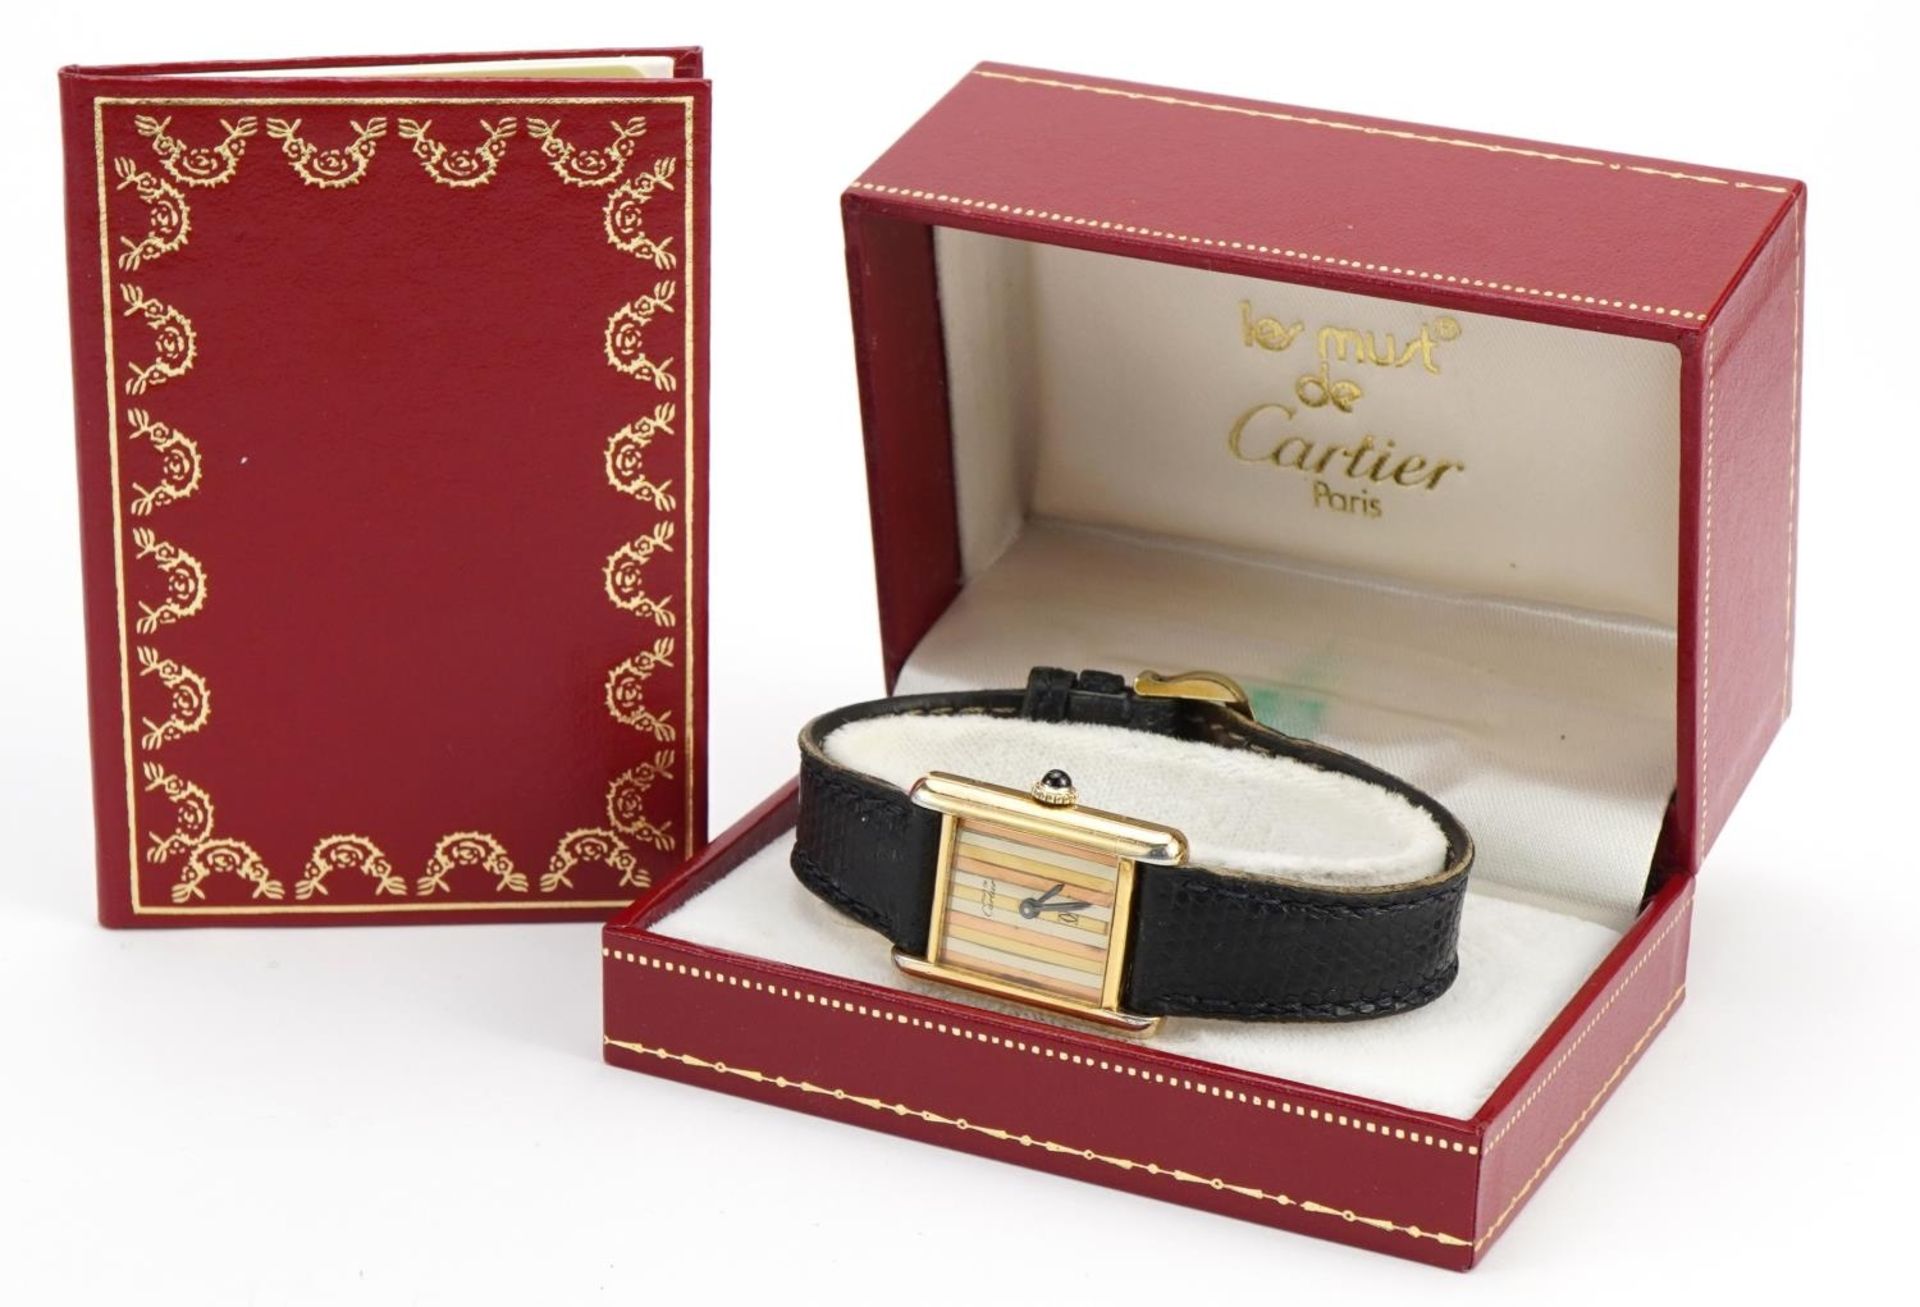 Cartier, vintage ladies Cartier Must De Cartier silver gilt wristwatch with certificate of origin - Image 6 of 6